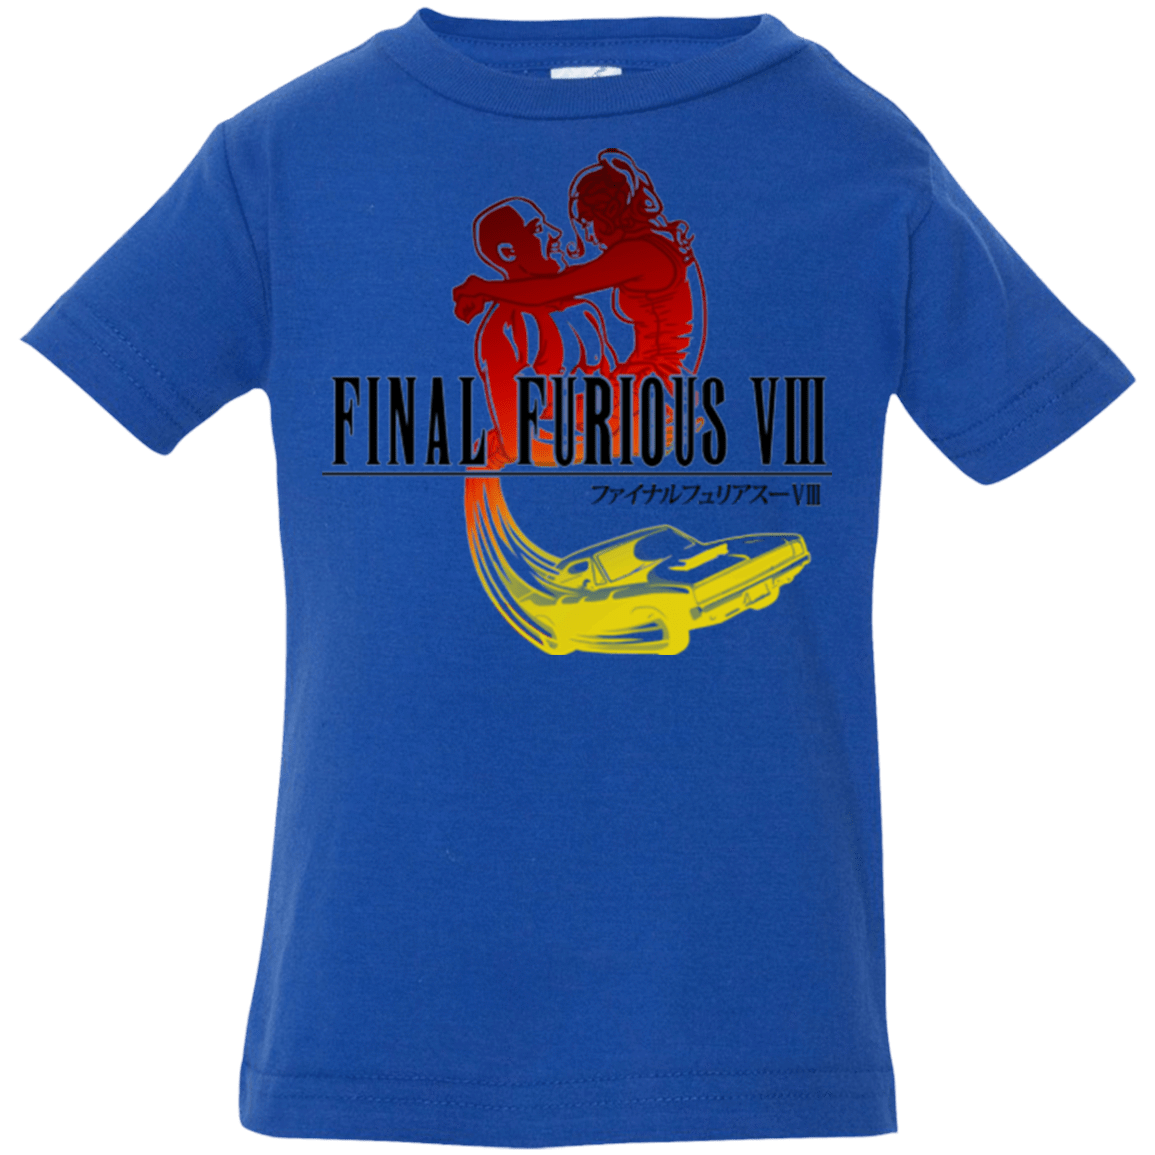 T-Shirts Royal / 6 Months Final Furious 8 Infant Premium T-Shirt